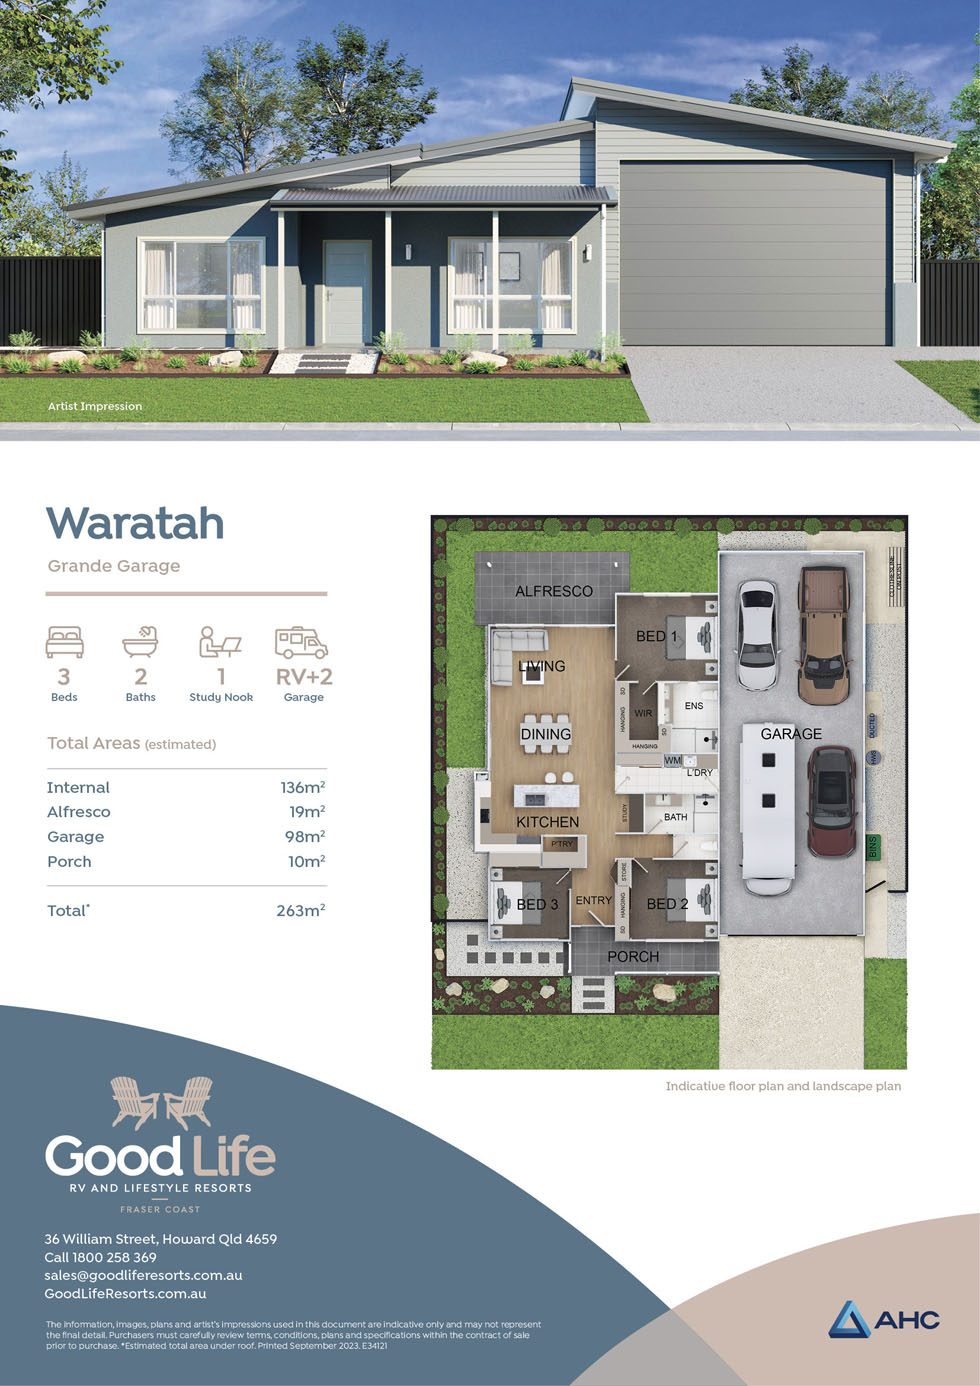 Home Design: Waratah Grande Garage